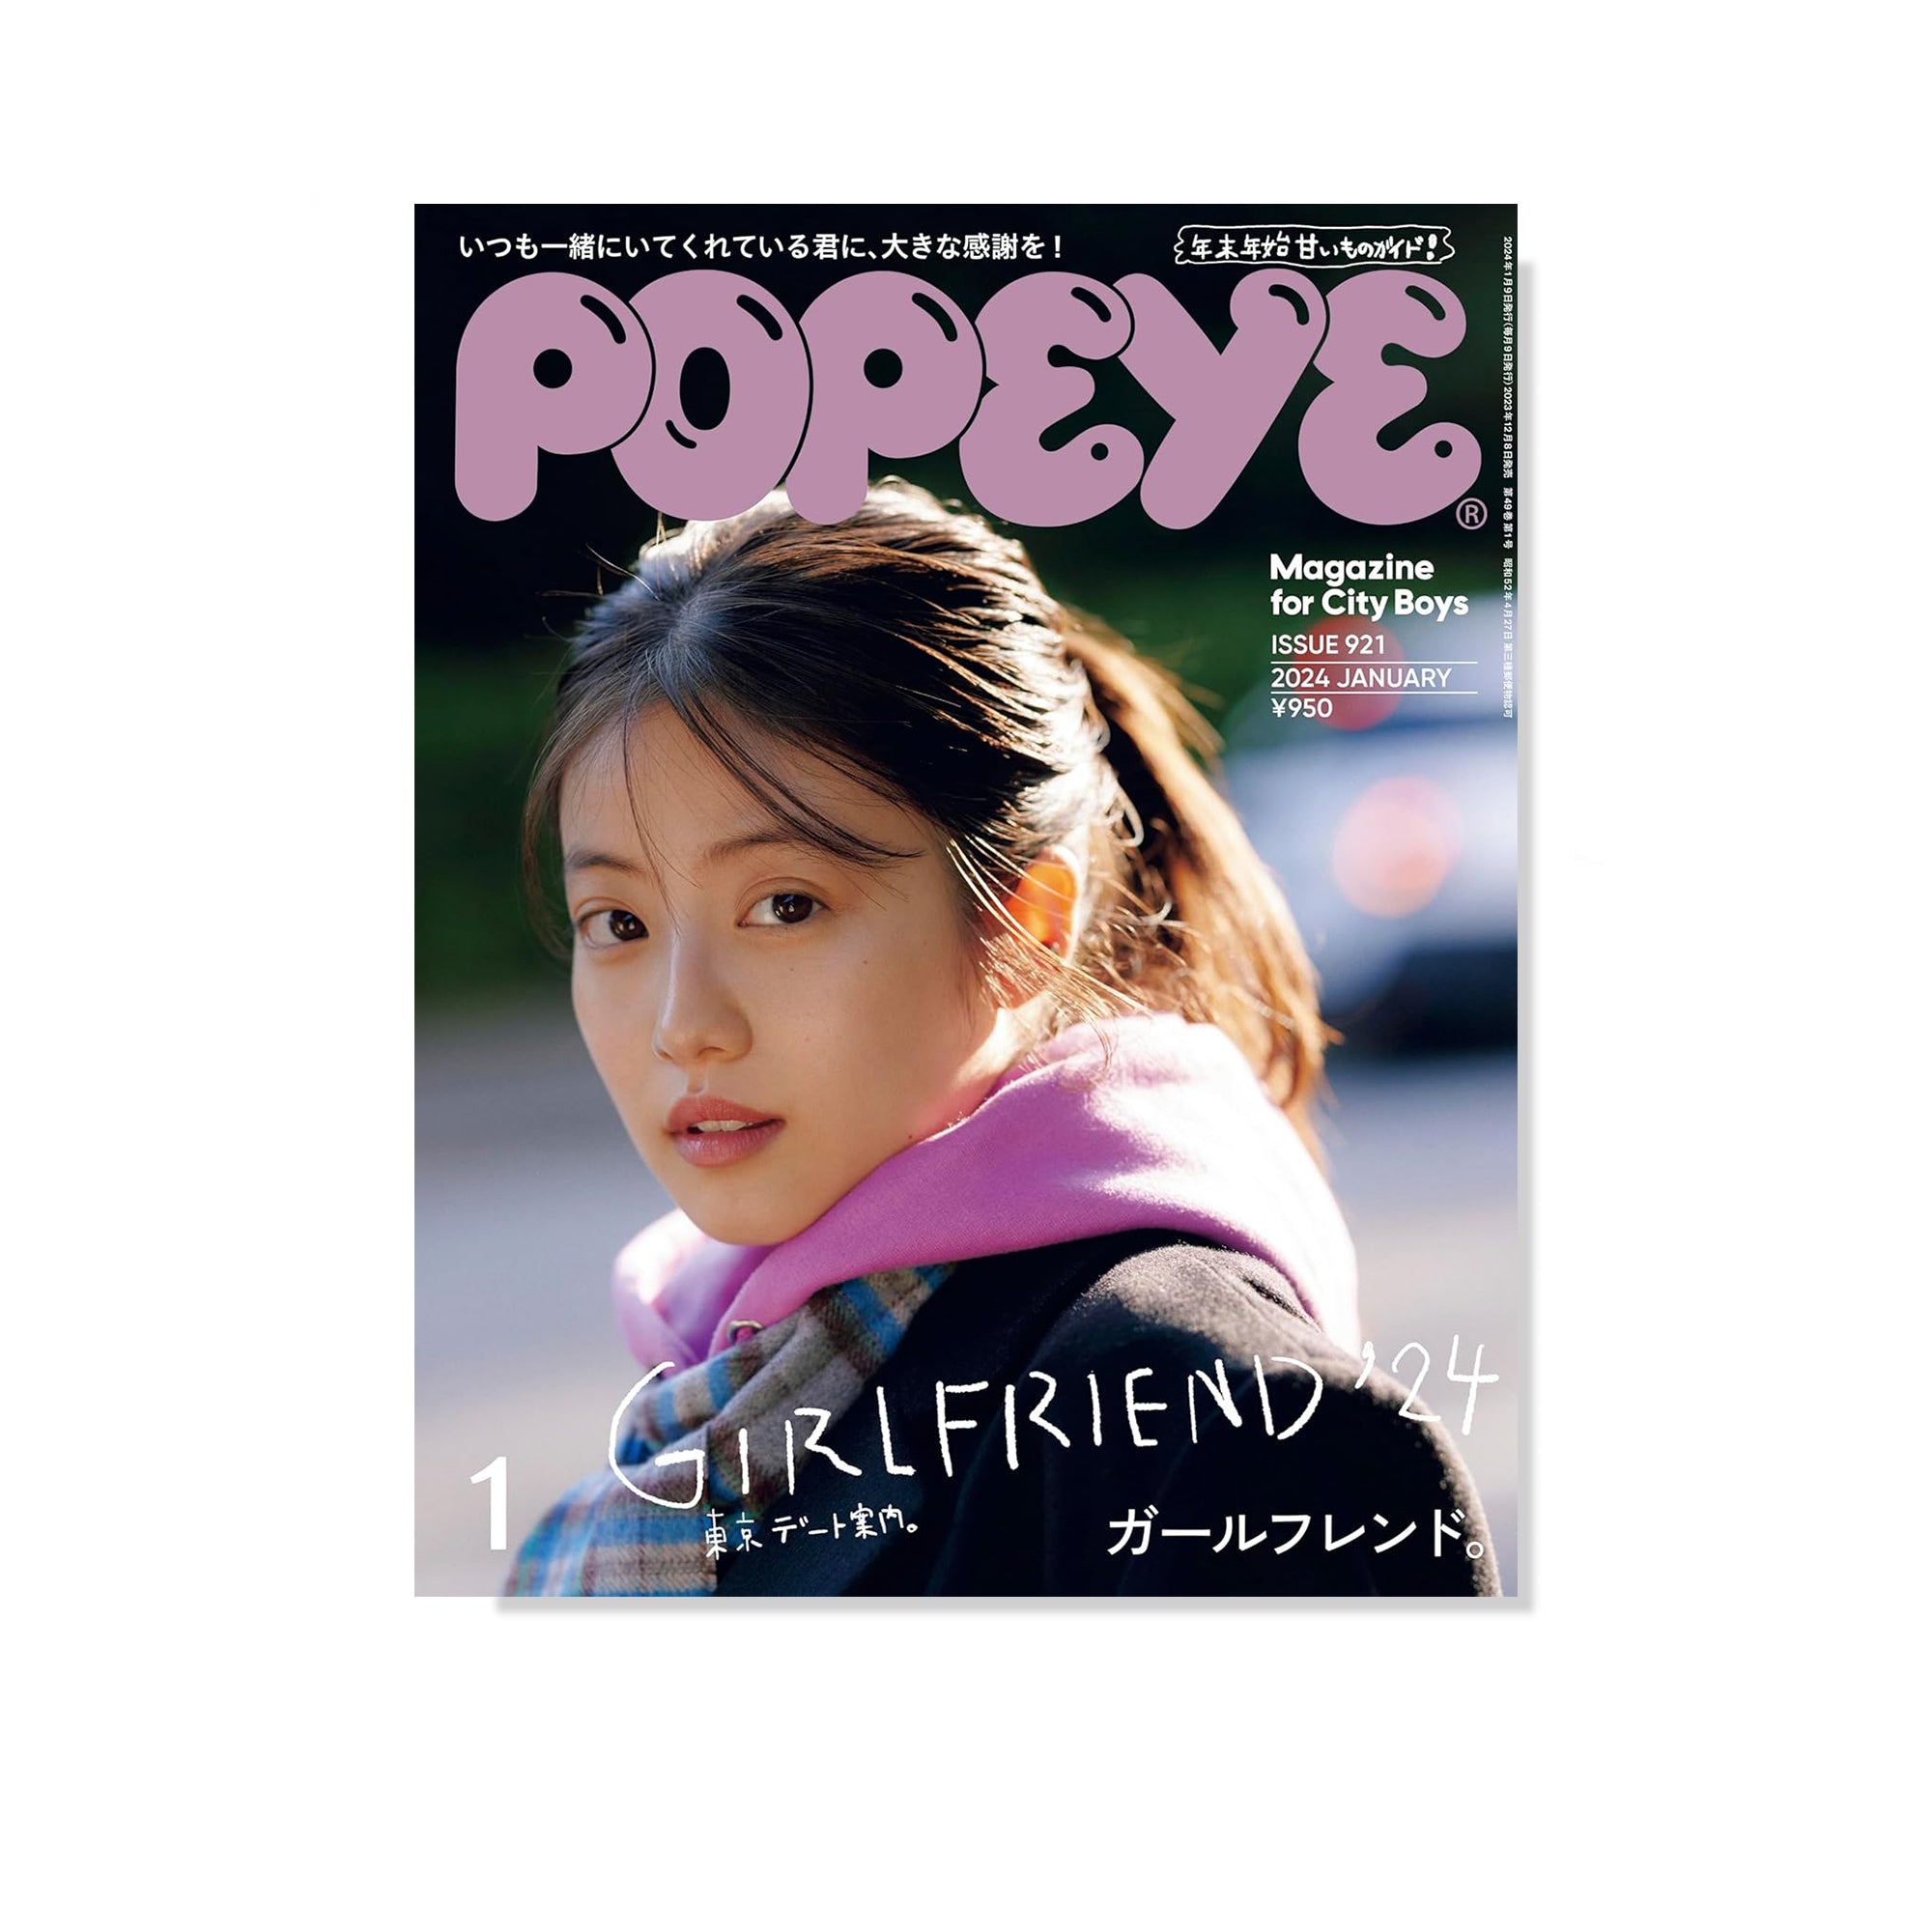 Popeye Issue 921 - January 2024